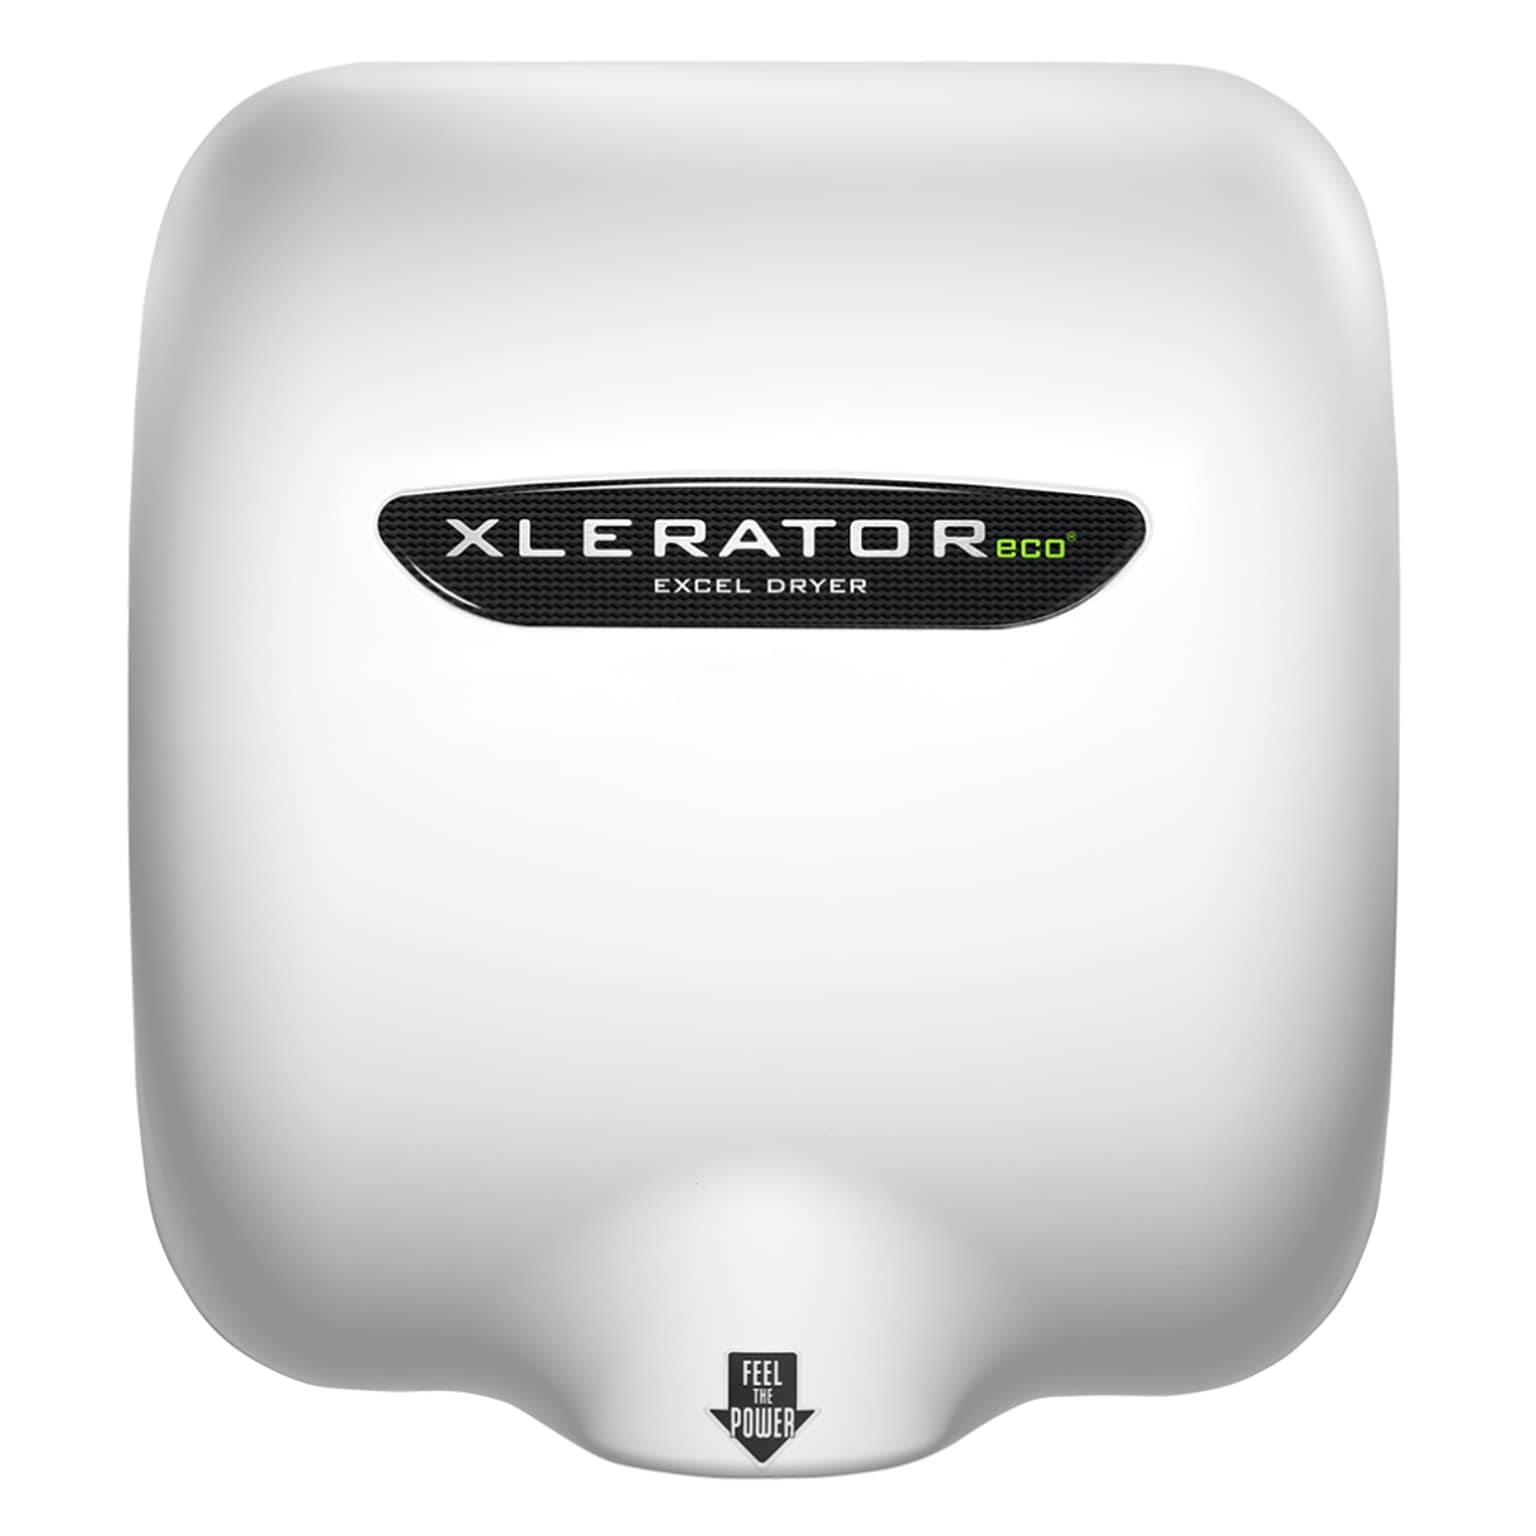 XLERATOReco 208-277V Automatic Hand Dryer, White (703166H)